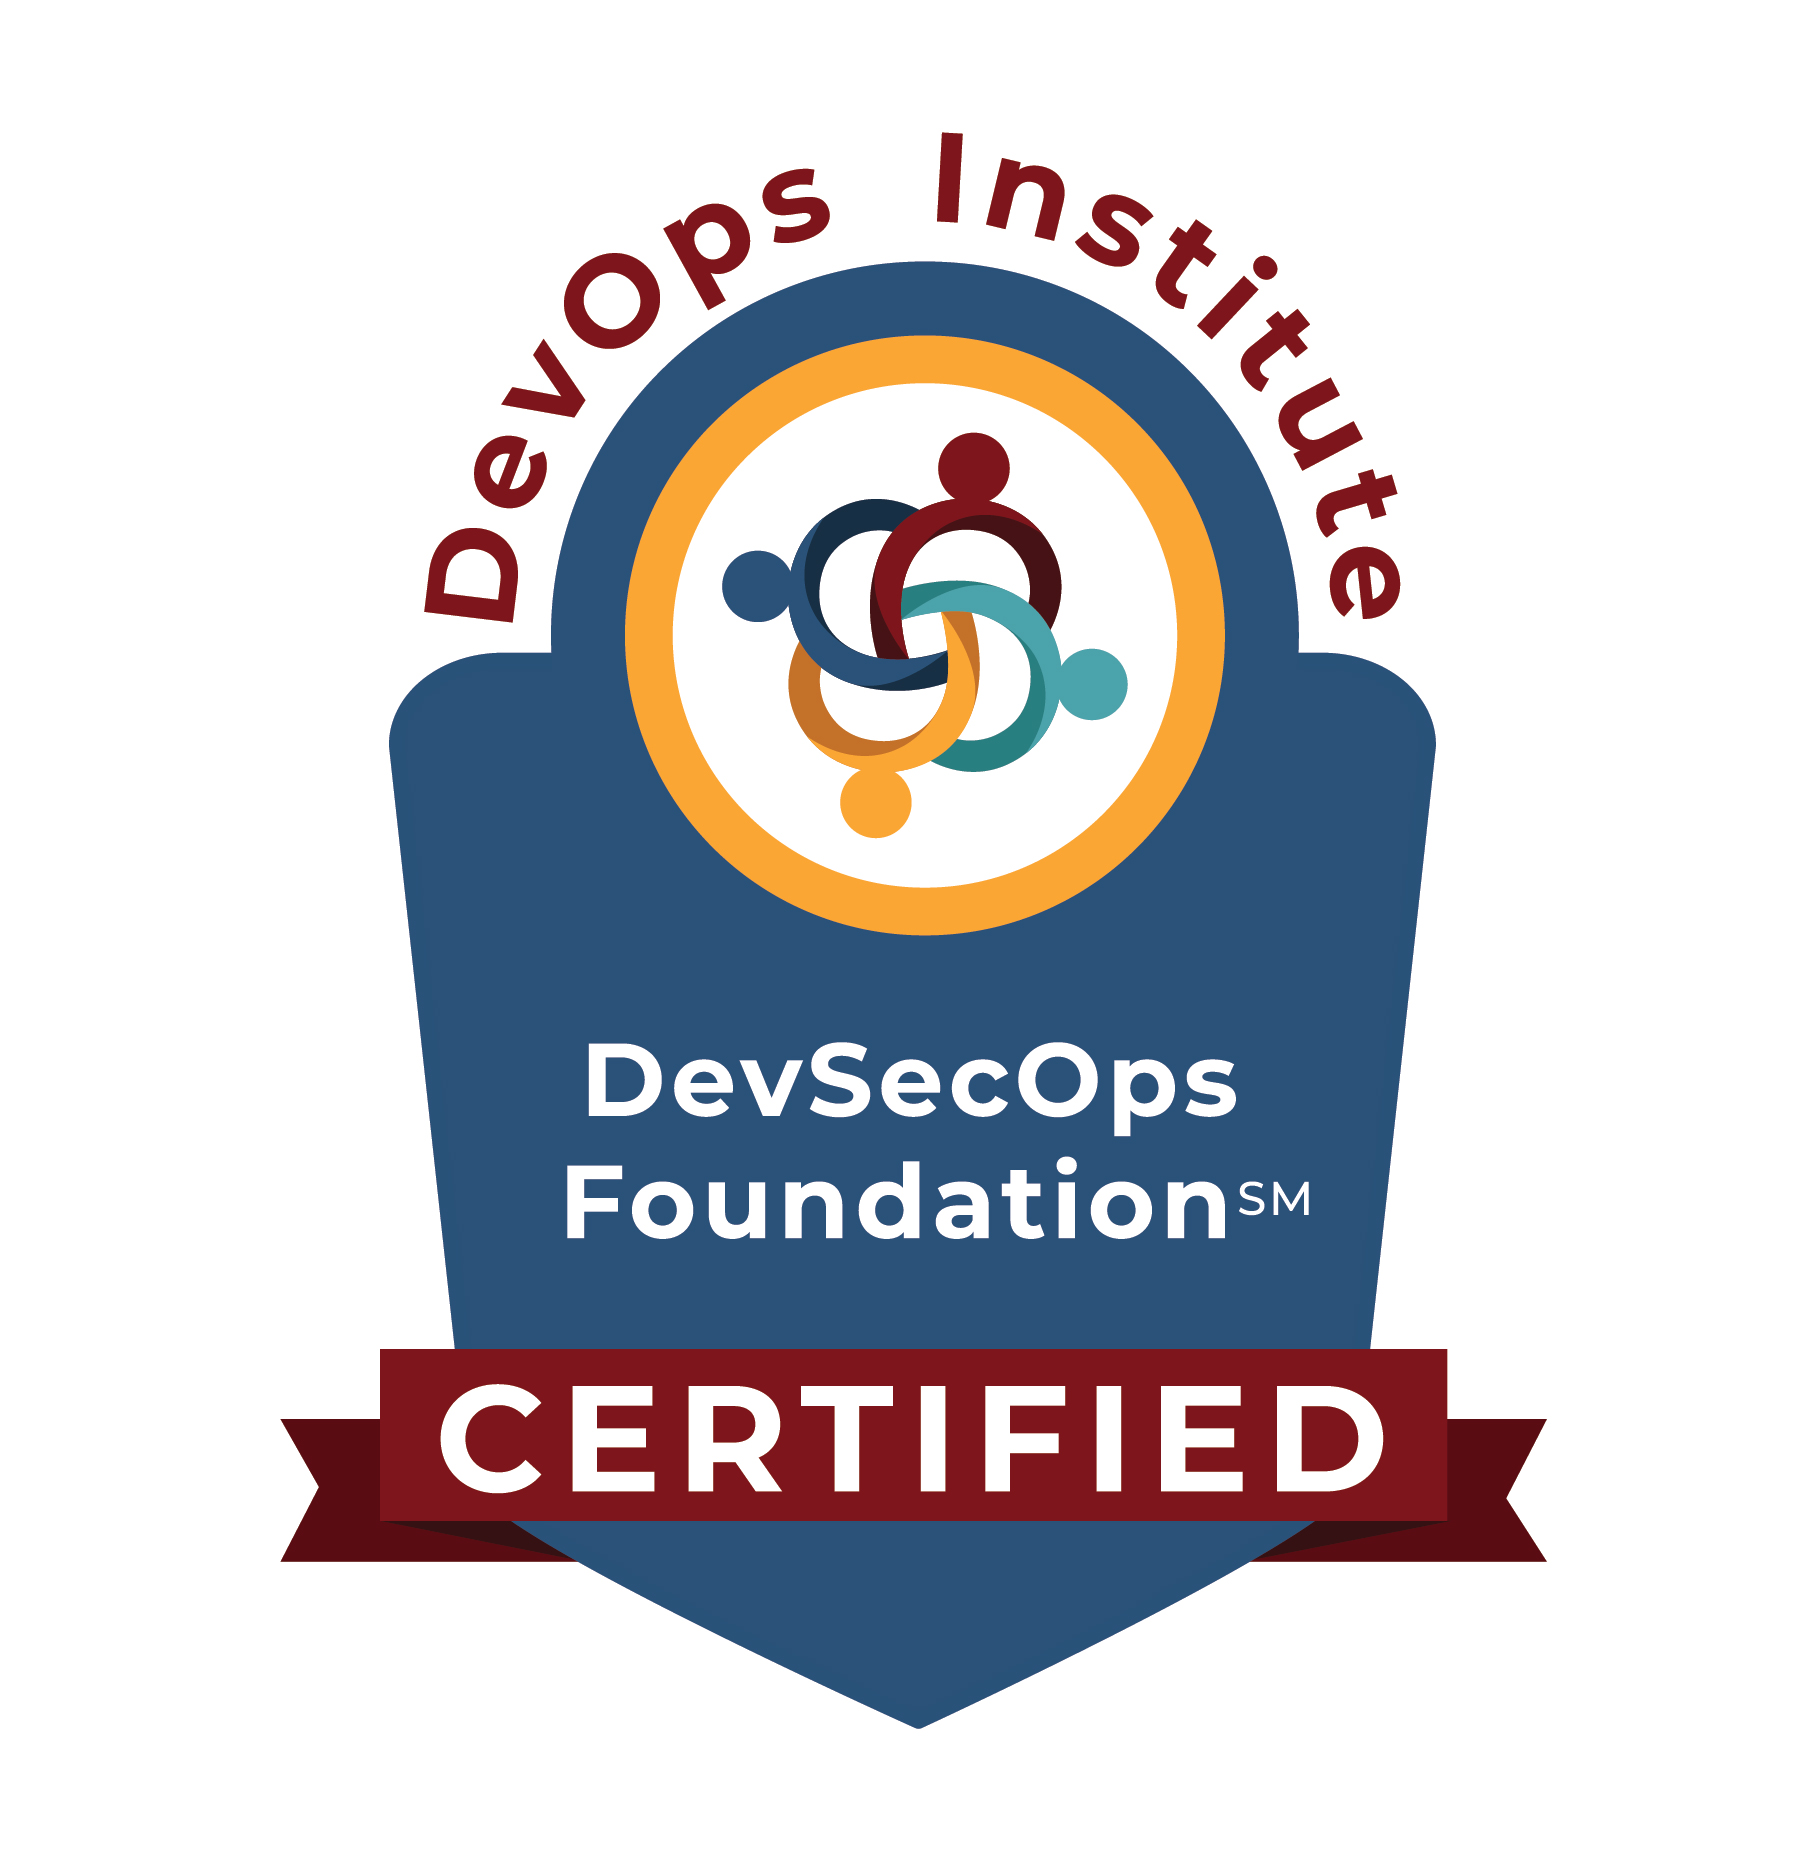 Formation et certification DevSecOps Foundation par Gologic